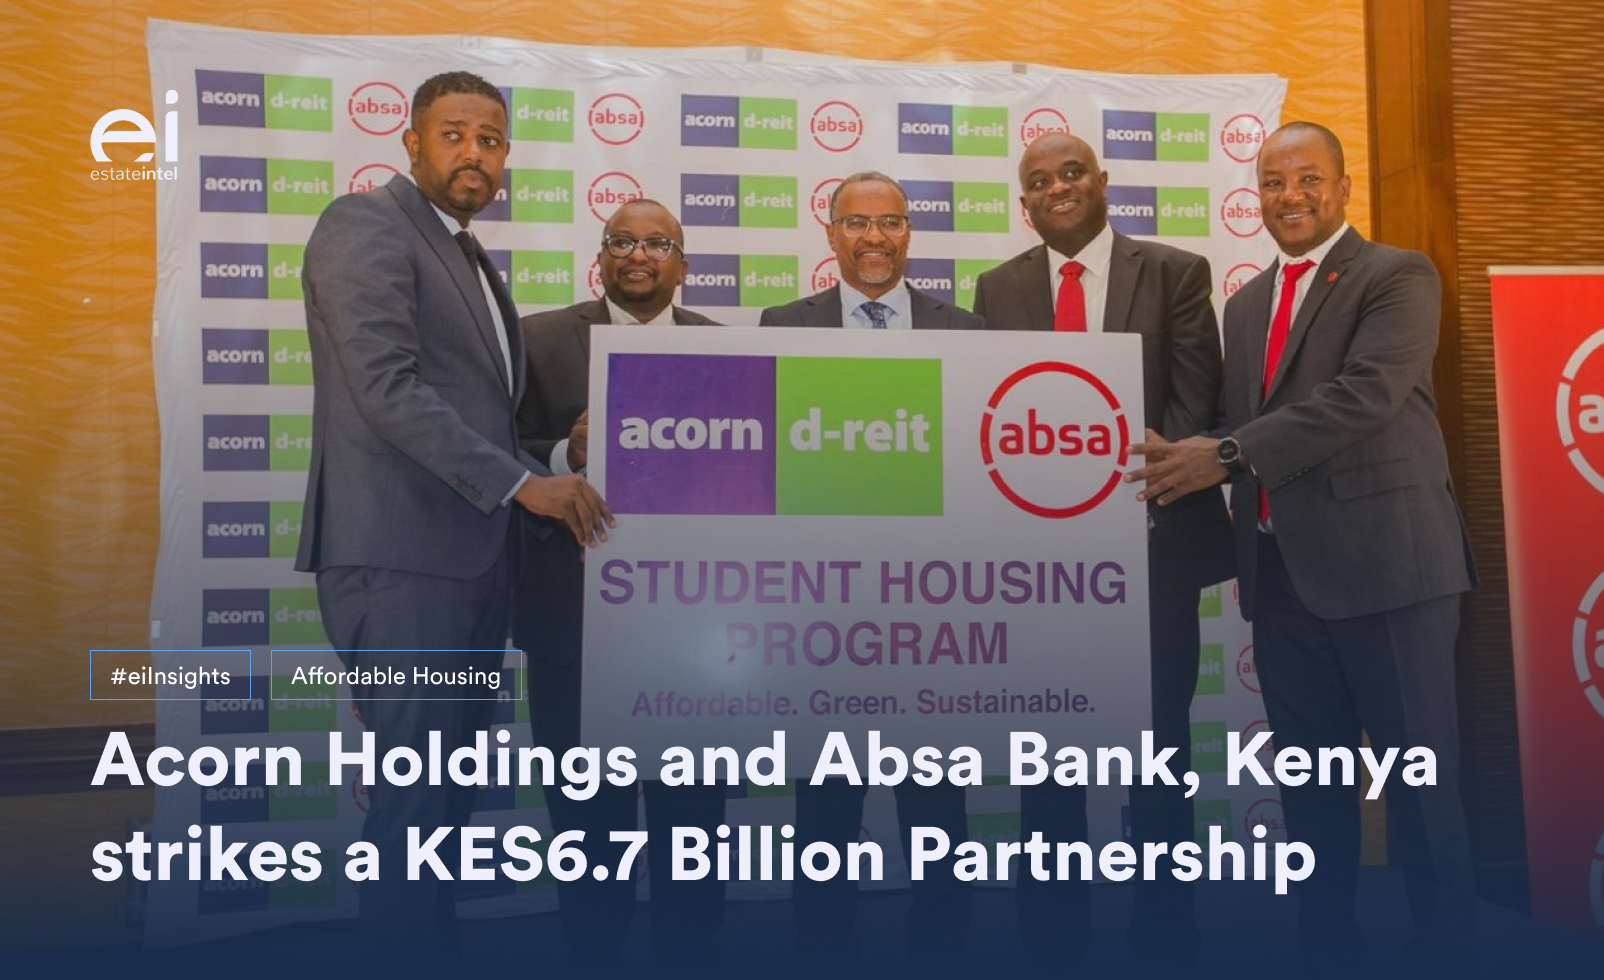 Acorn Holdings and Absa Bank, Kenya strikes a KES6.7 Billion Partnership